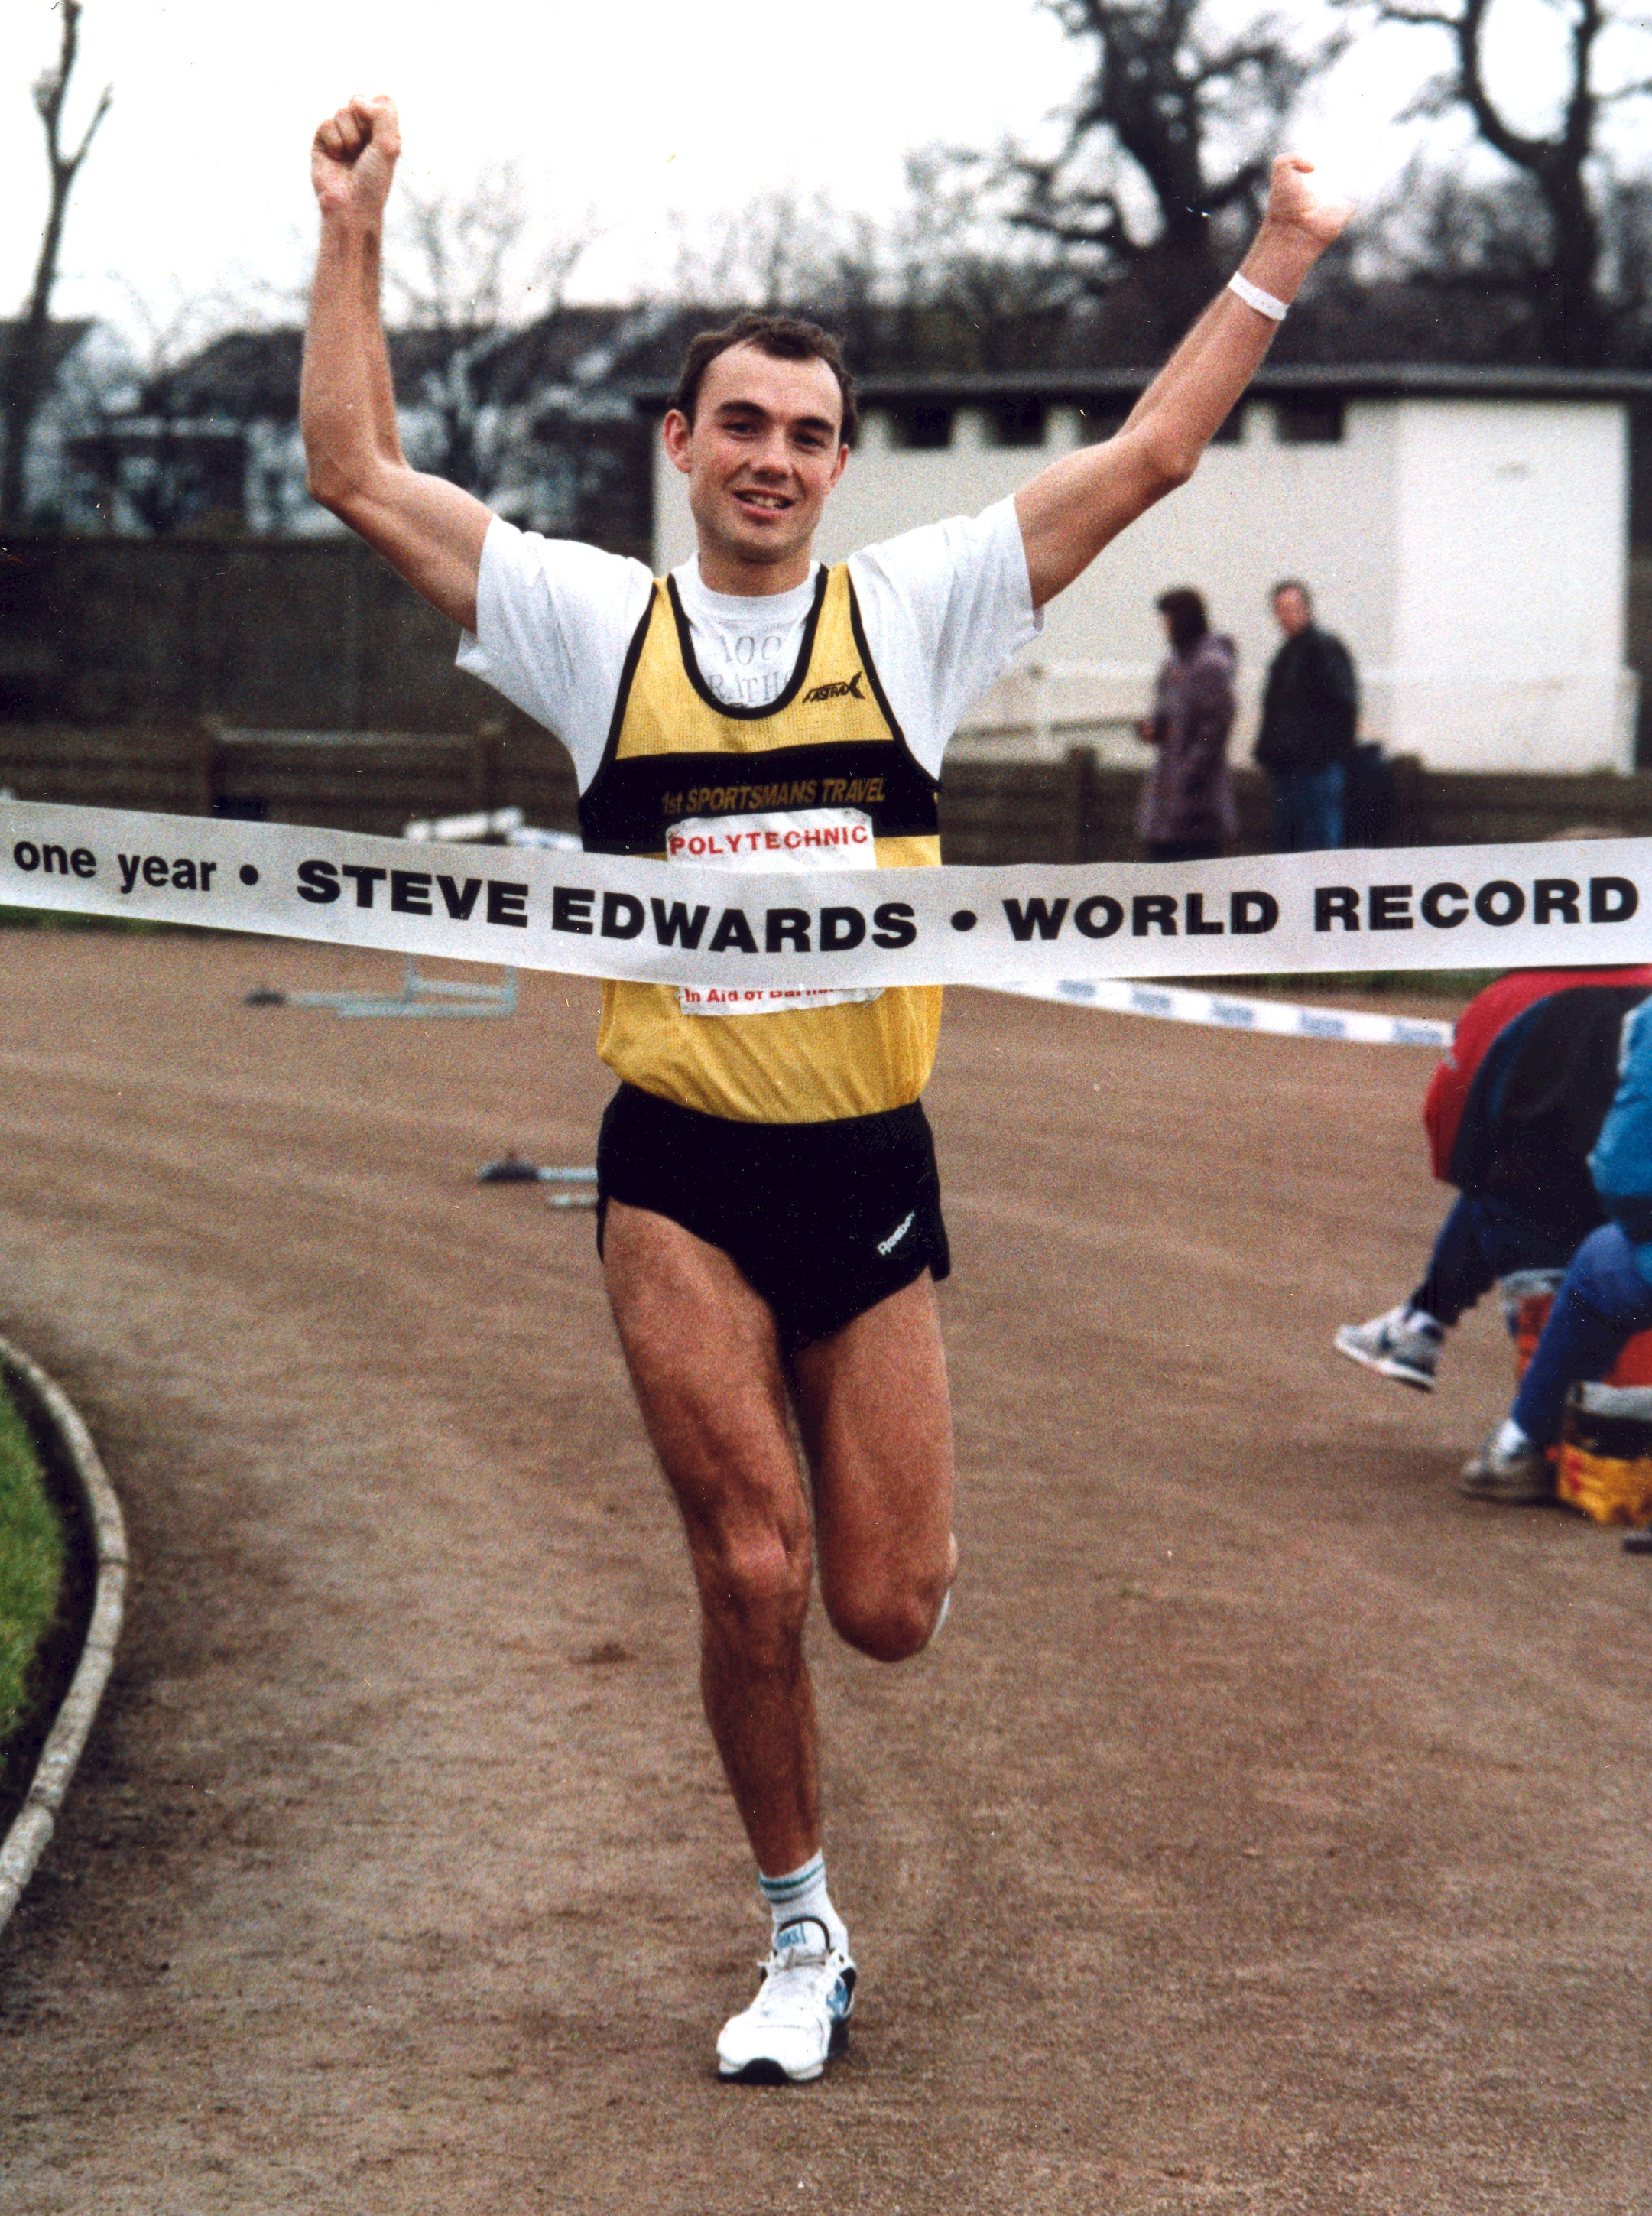 Steve Edwards World Record 87 Marathons In One Year - Polytechnic Marathon - March 1992. Credit: SWNS